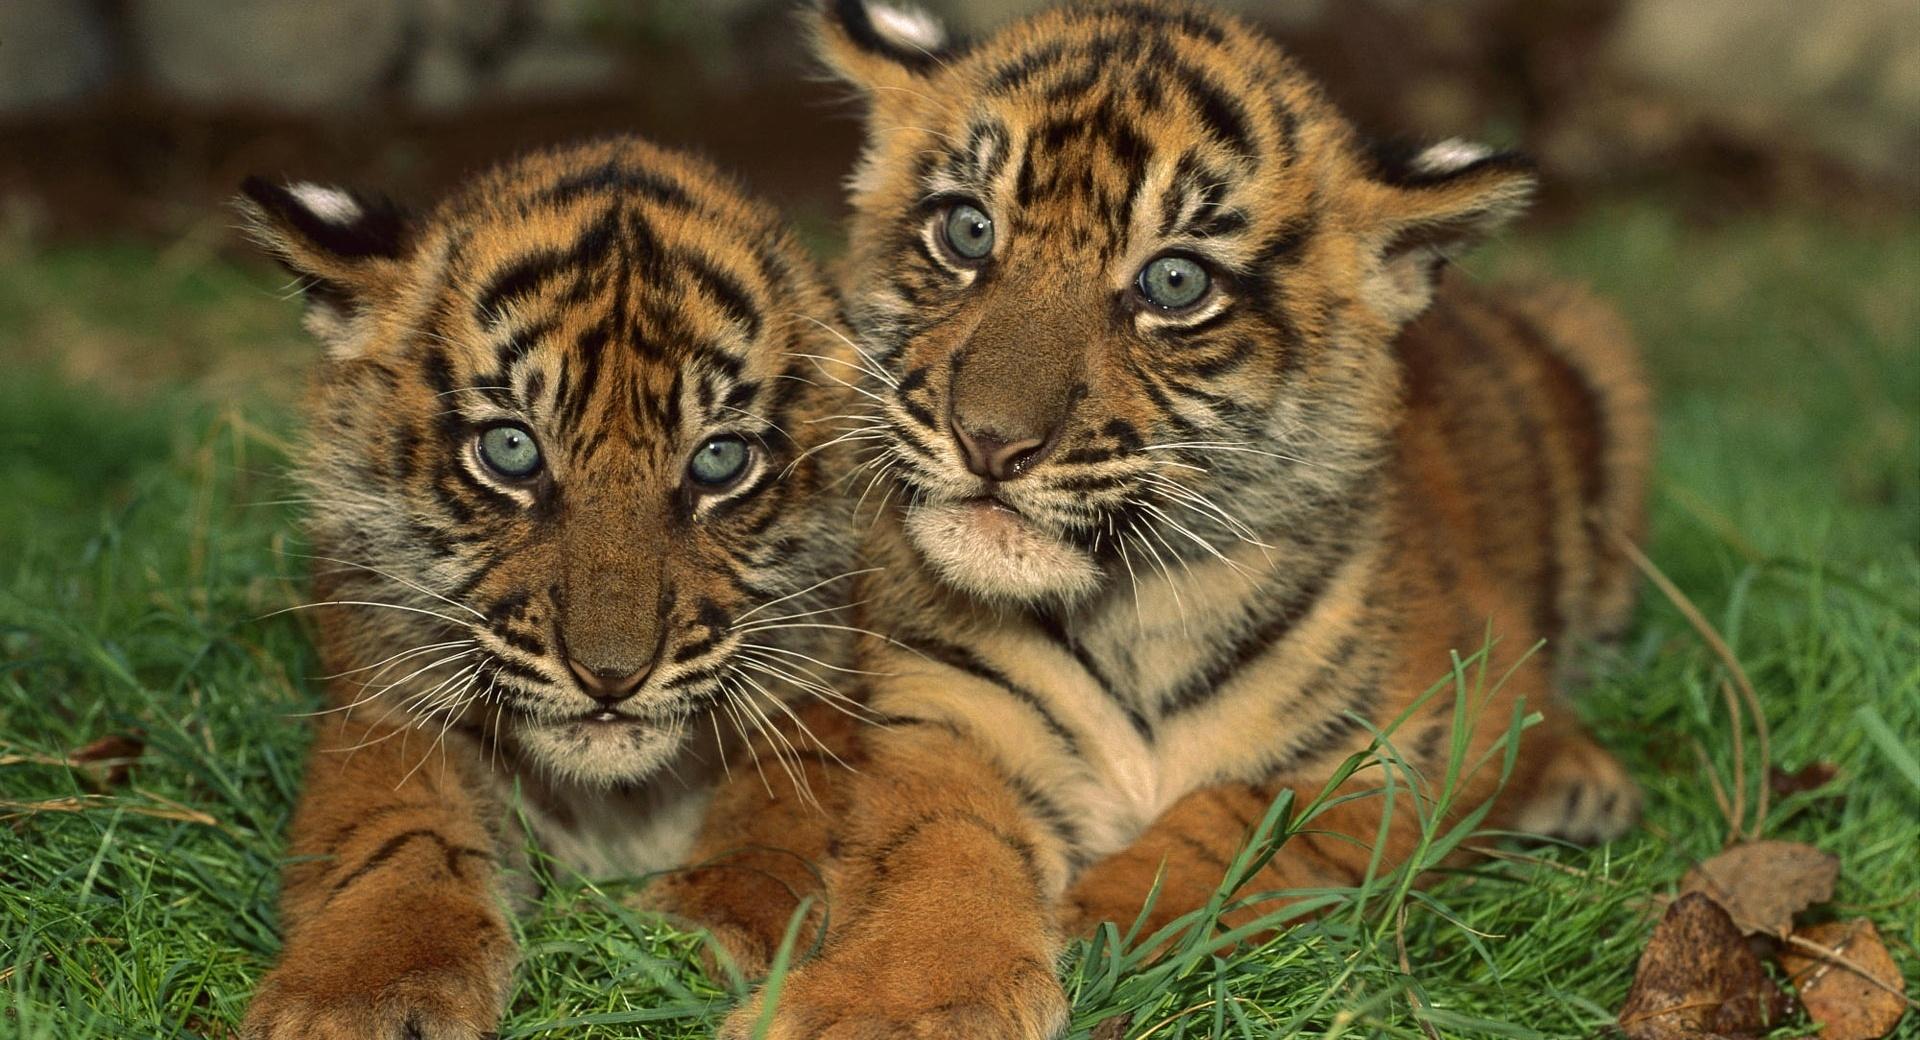 Sumatran Tiger Cubs at 1600 x 1200 size wallpapers HD quality